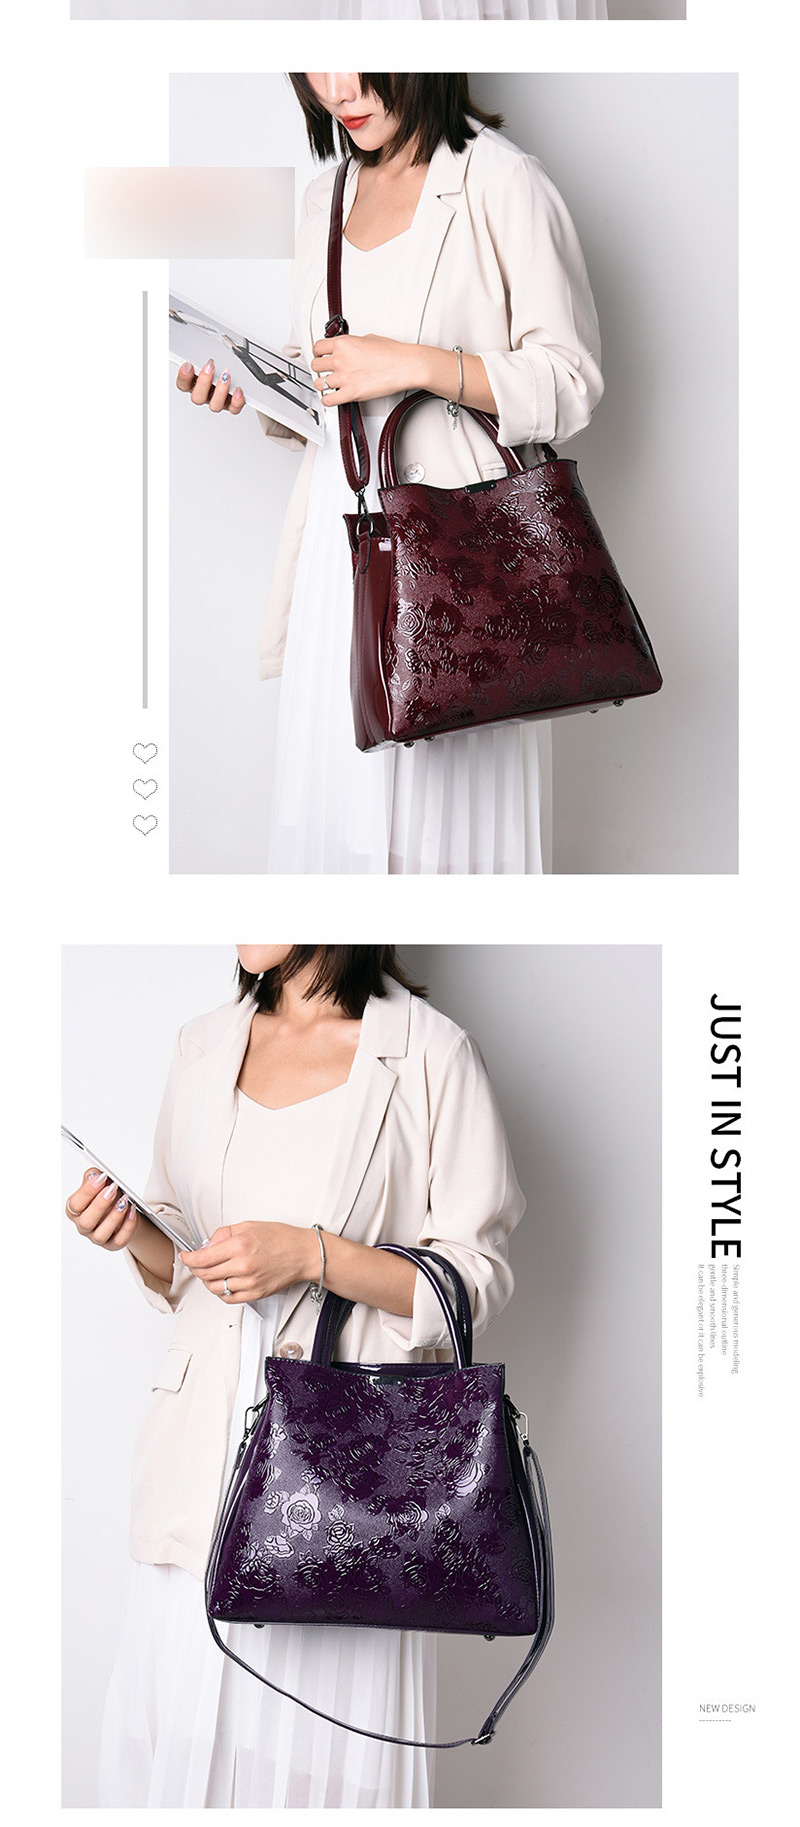 Fashion Purple Rose Pattern Portable Slung Shoulder Bag,Handbags